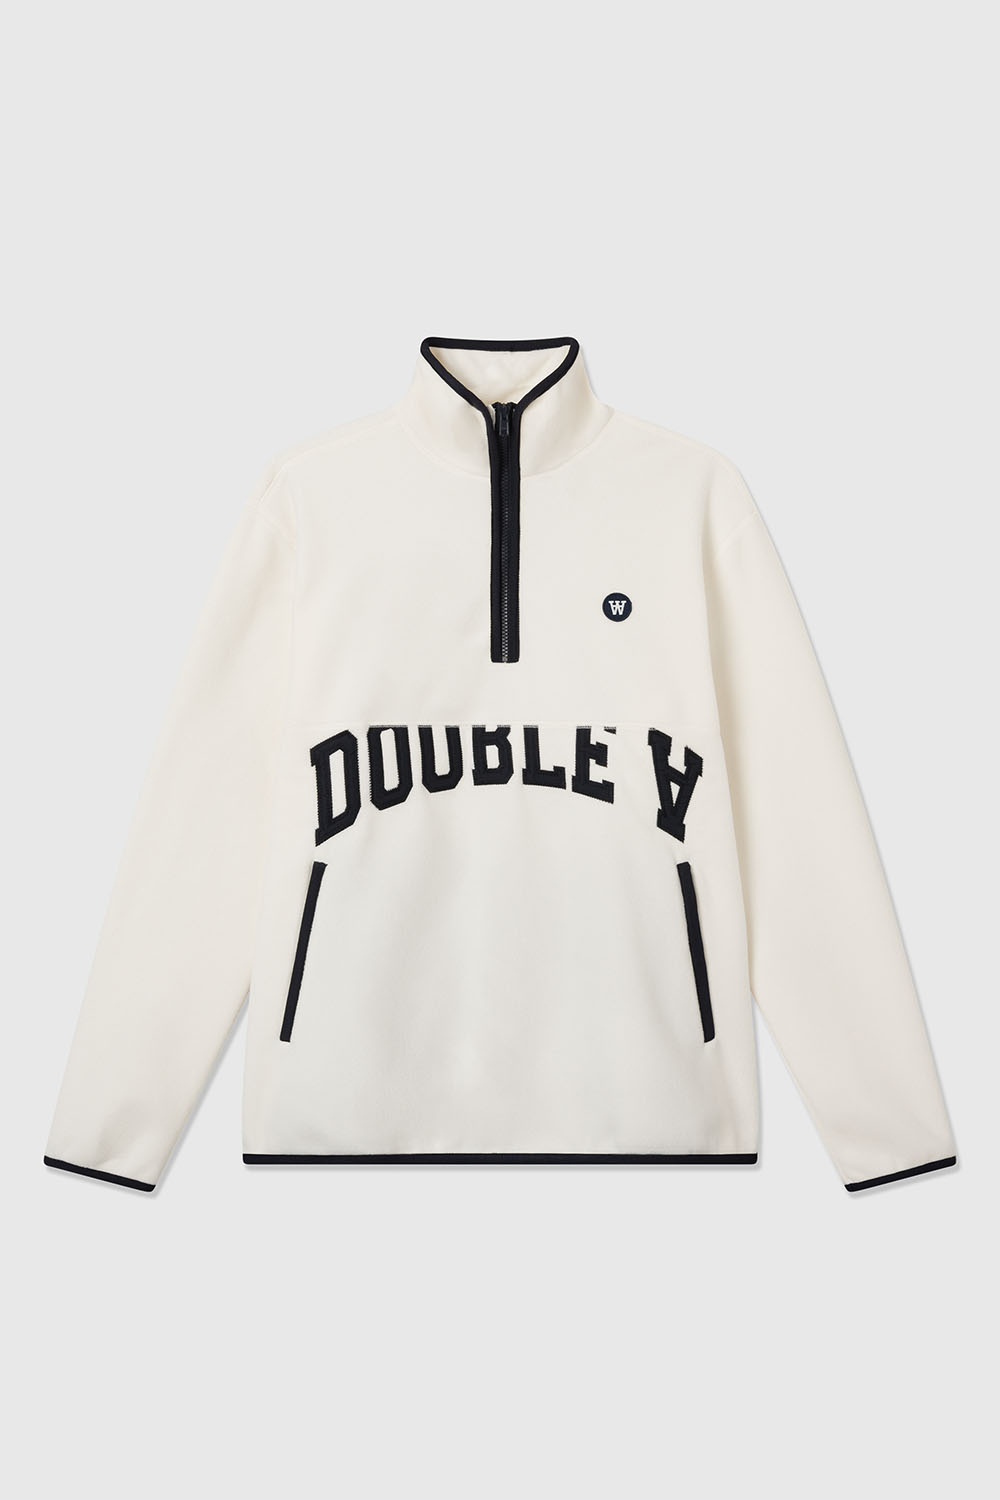 Double A by Wood Wood Jay zip fleece sweatshirt Off-white